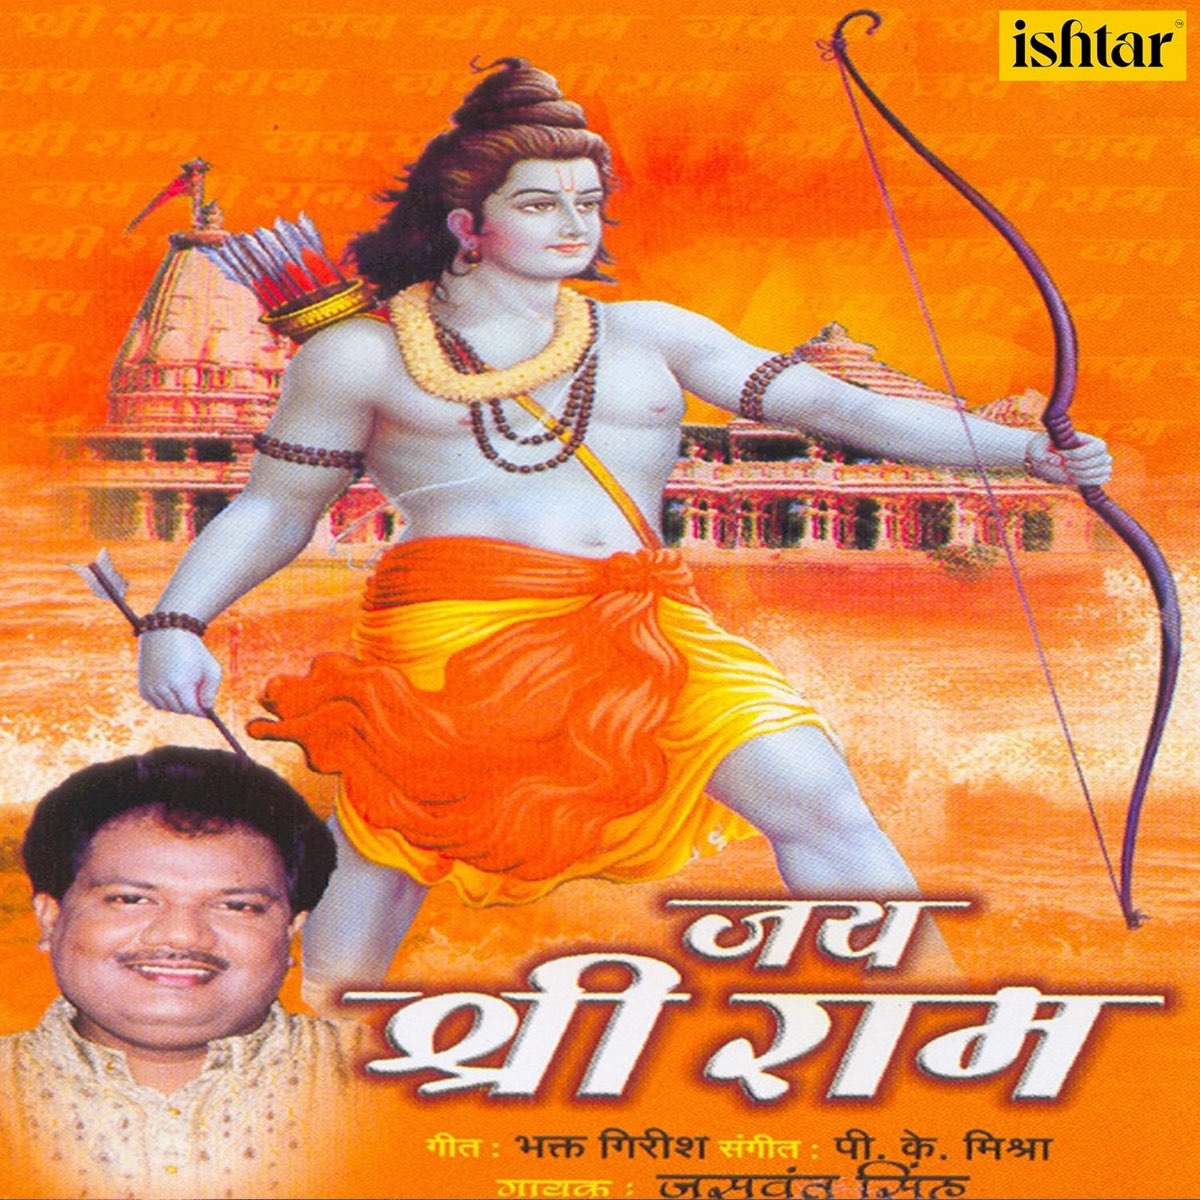 Jai Shri Ram by Jaswant Singh on Apple Music